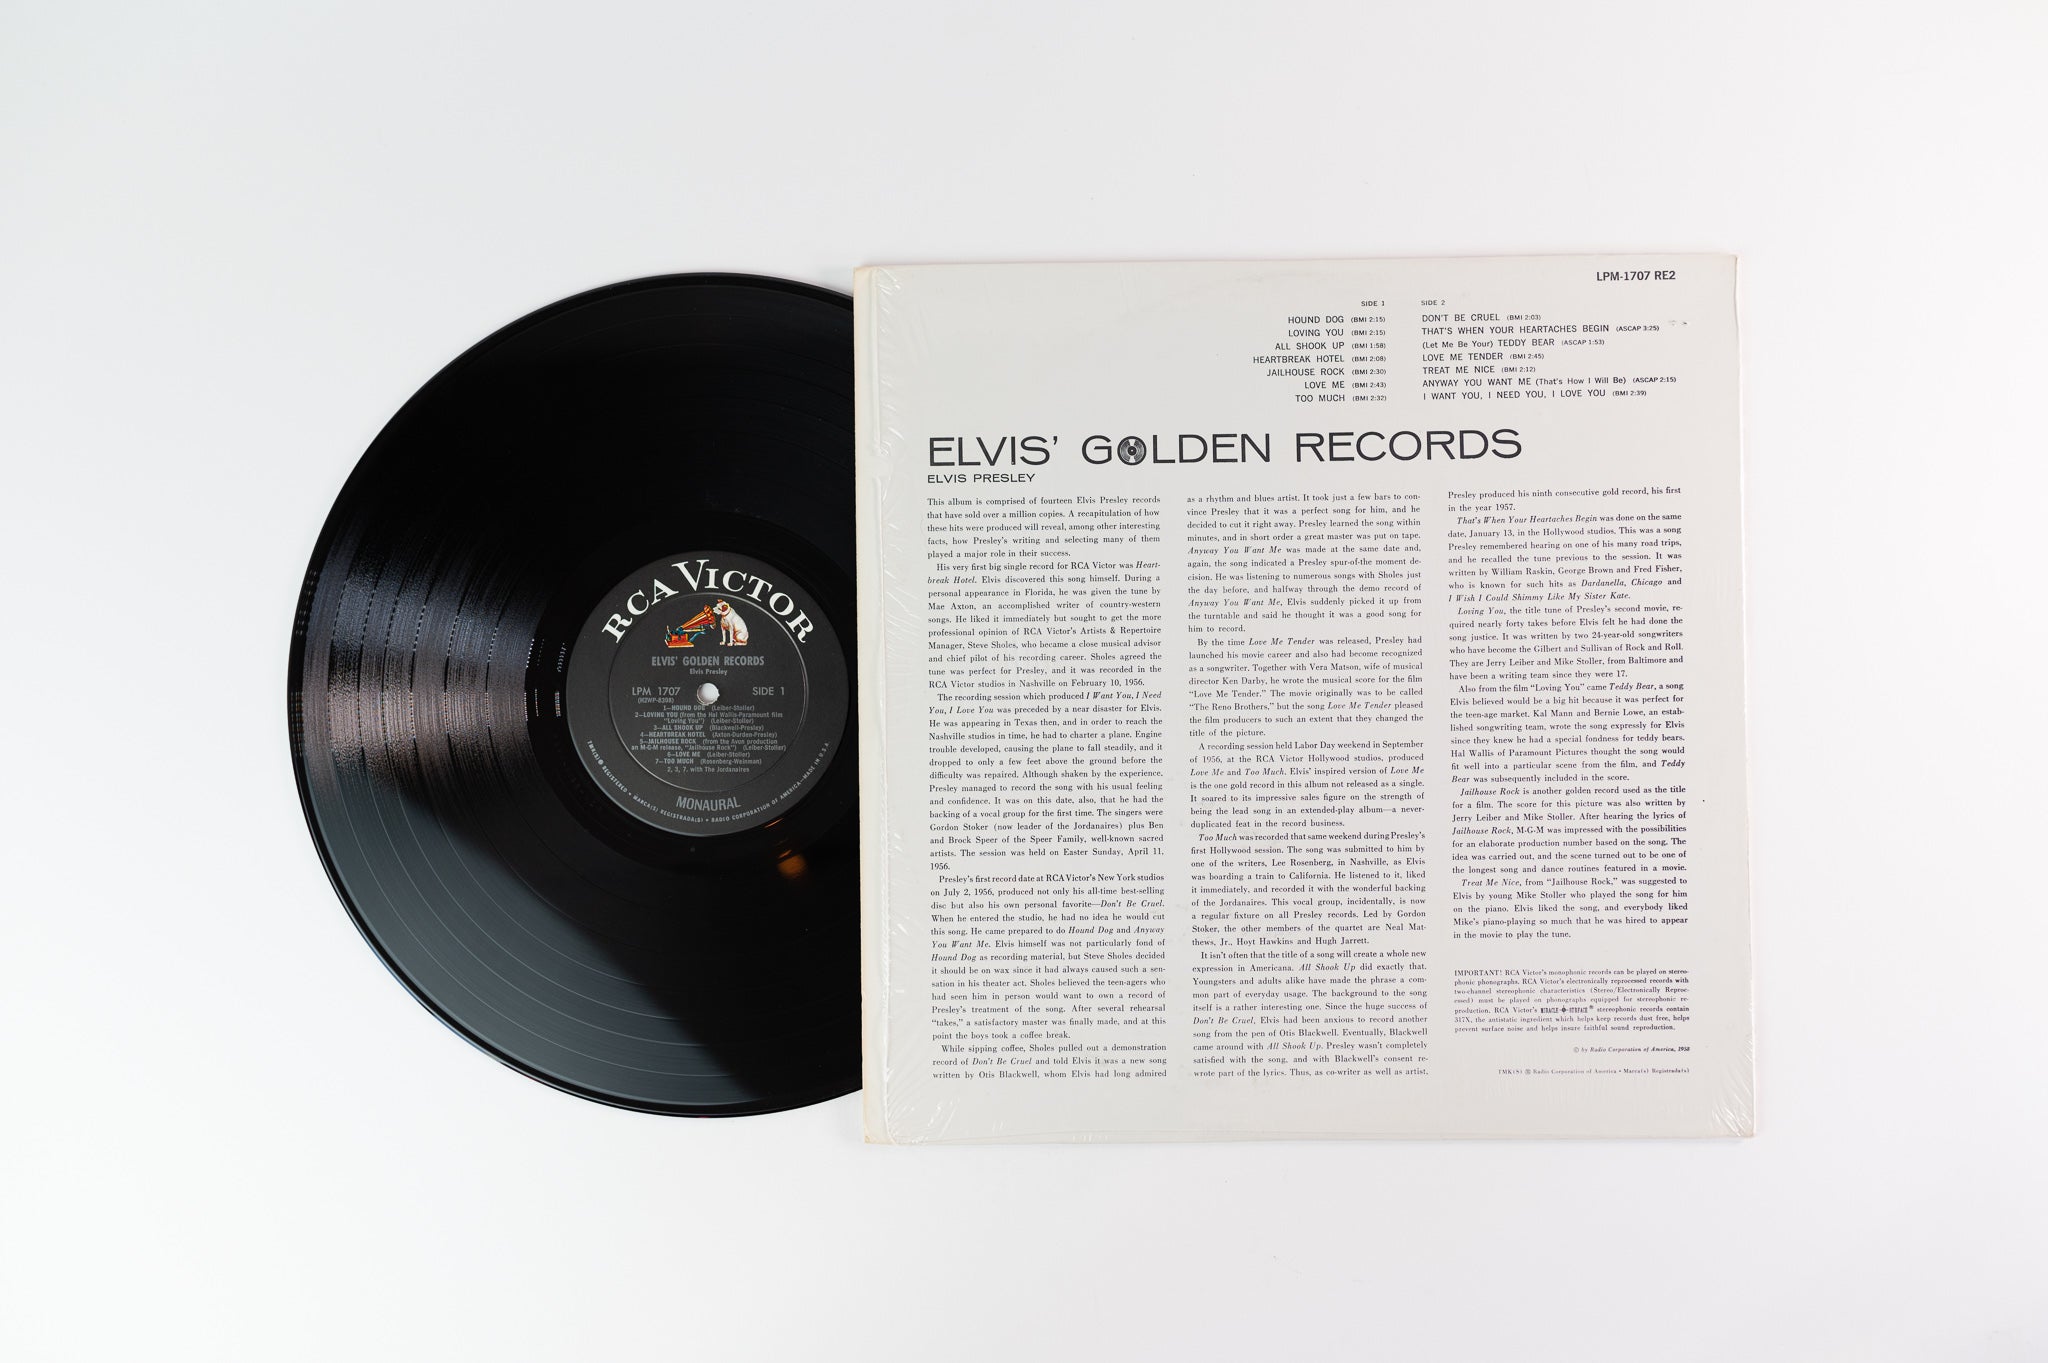 Elvis Presley - Elvis' Golden Records on RCA Mono LPM-1707 Repress